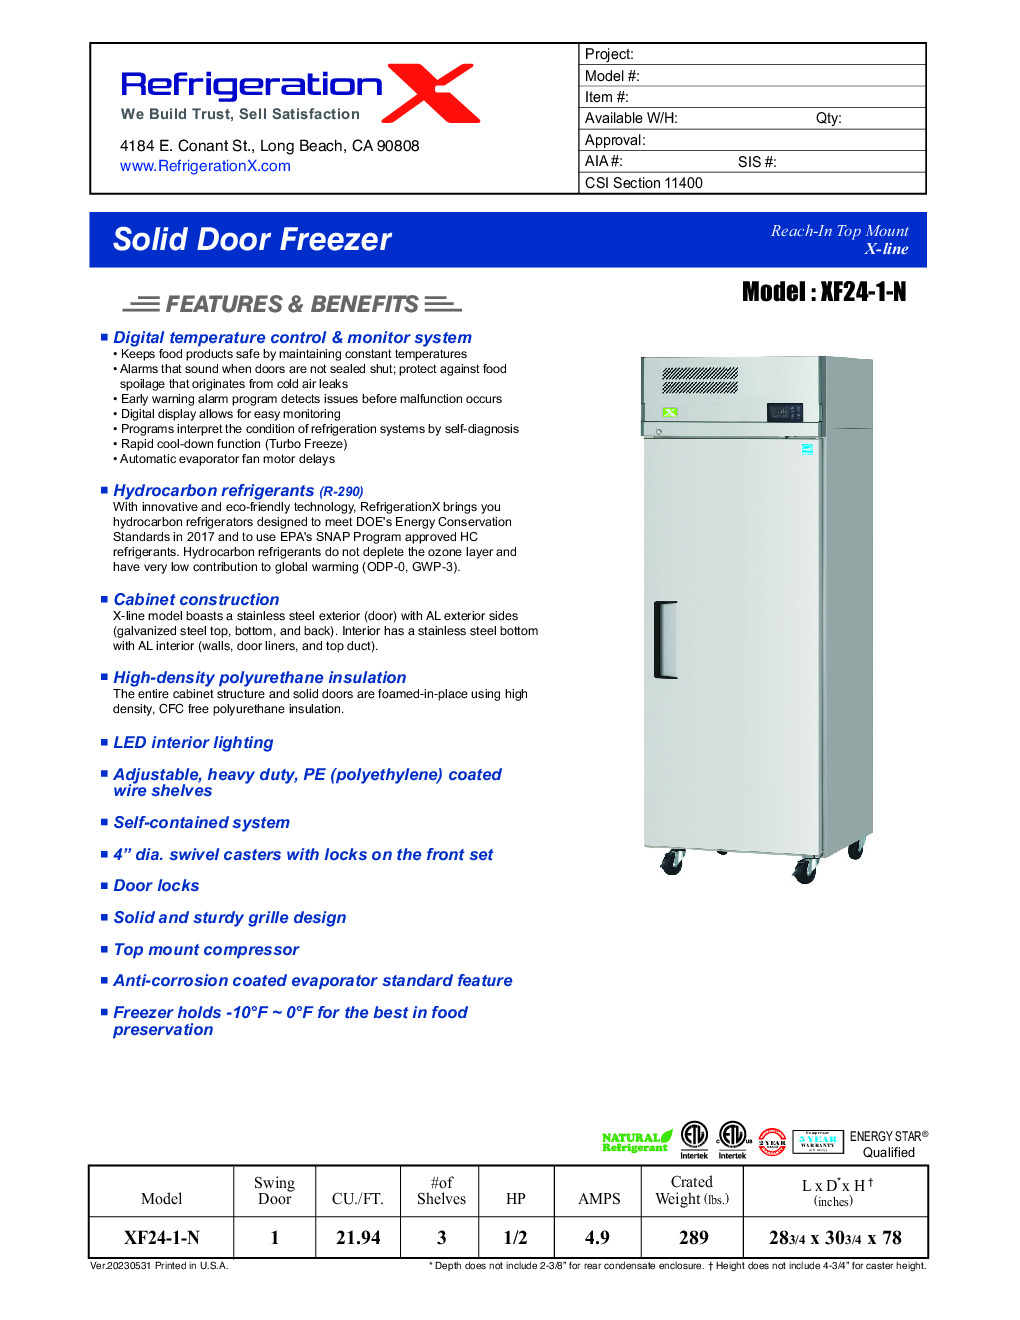 RefrigerationX XF24-1-N Reach-In Freezer